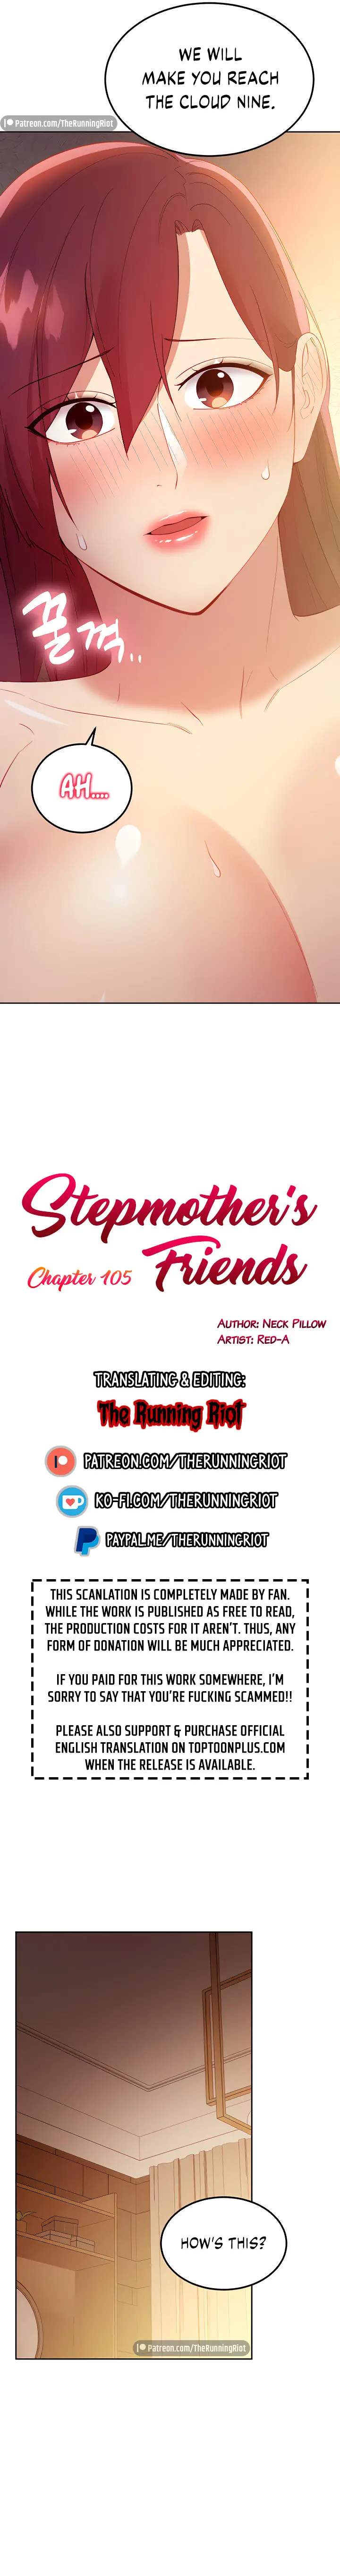 stepmother-friends-chap-105-1